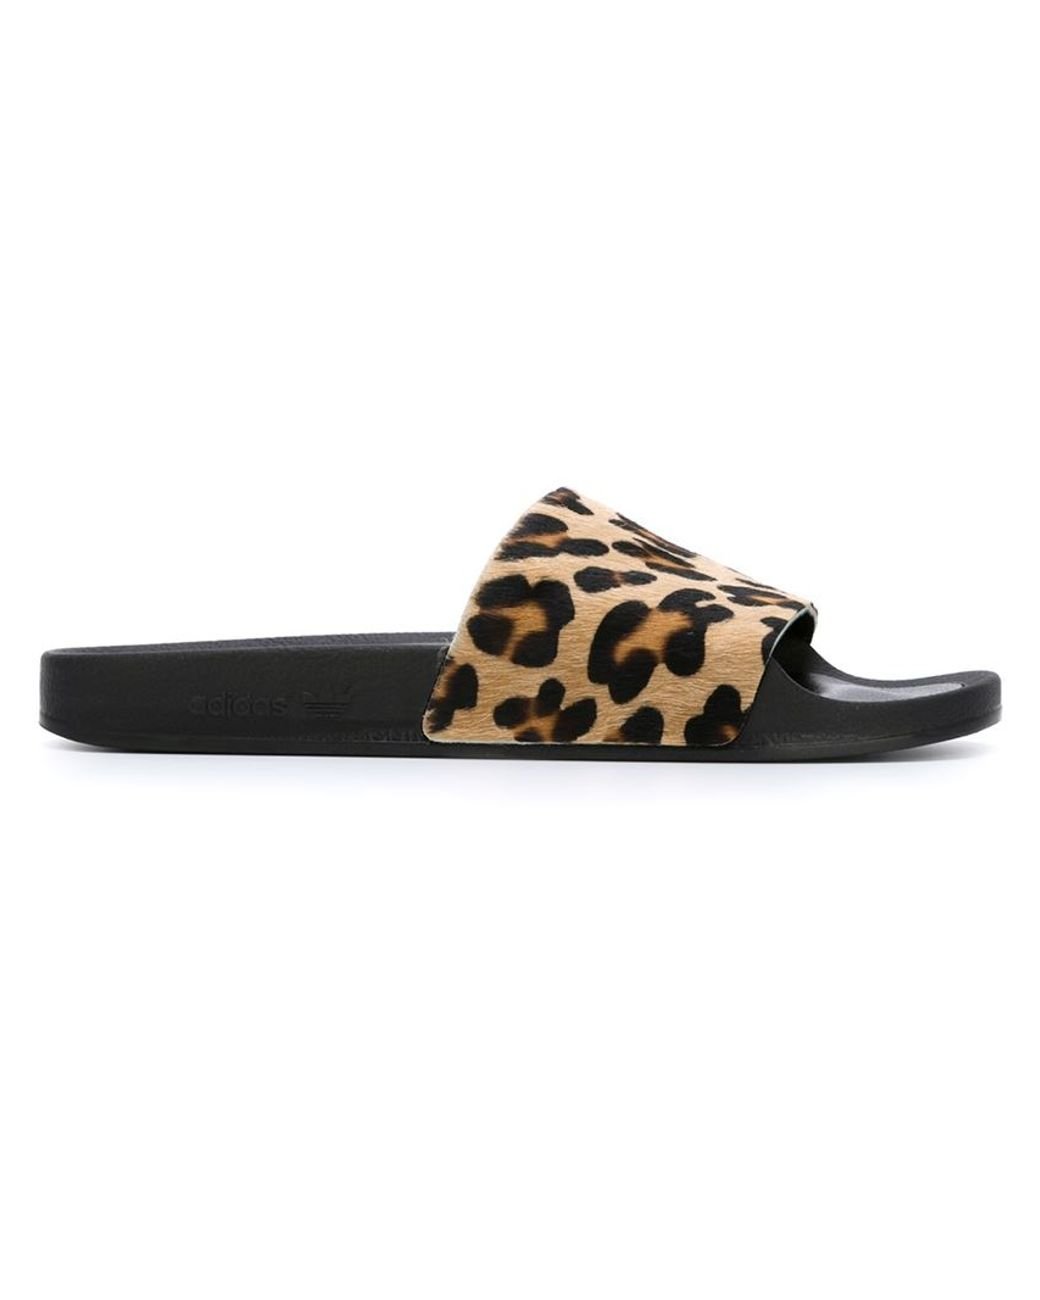 adidas Originals Adilette Leopard-Print Slides | Lyst